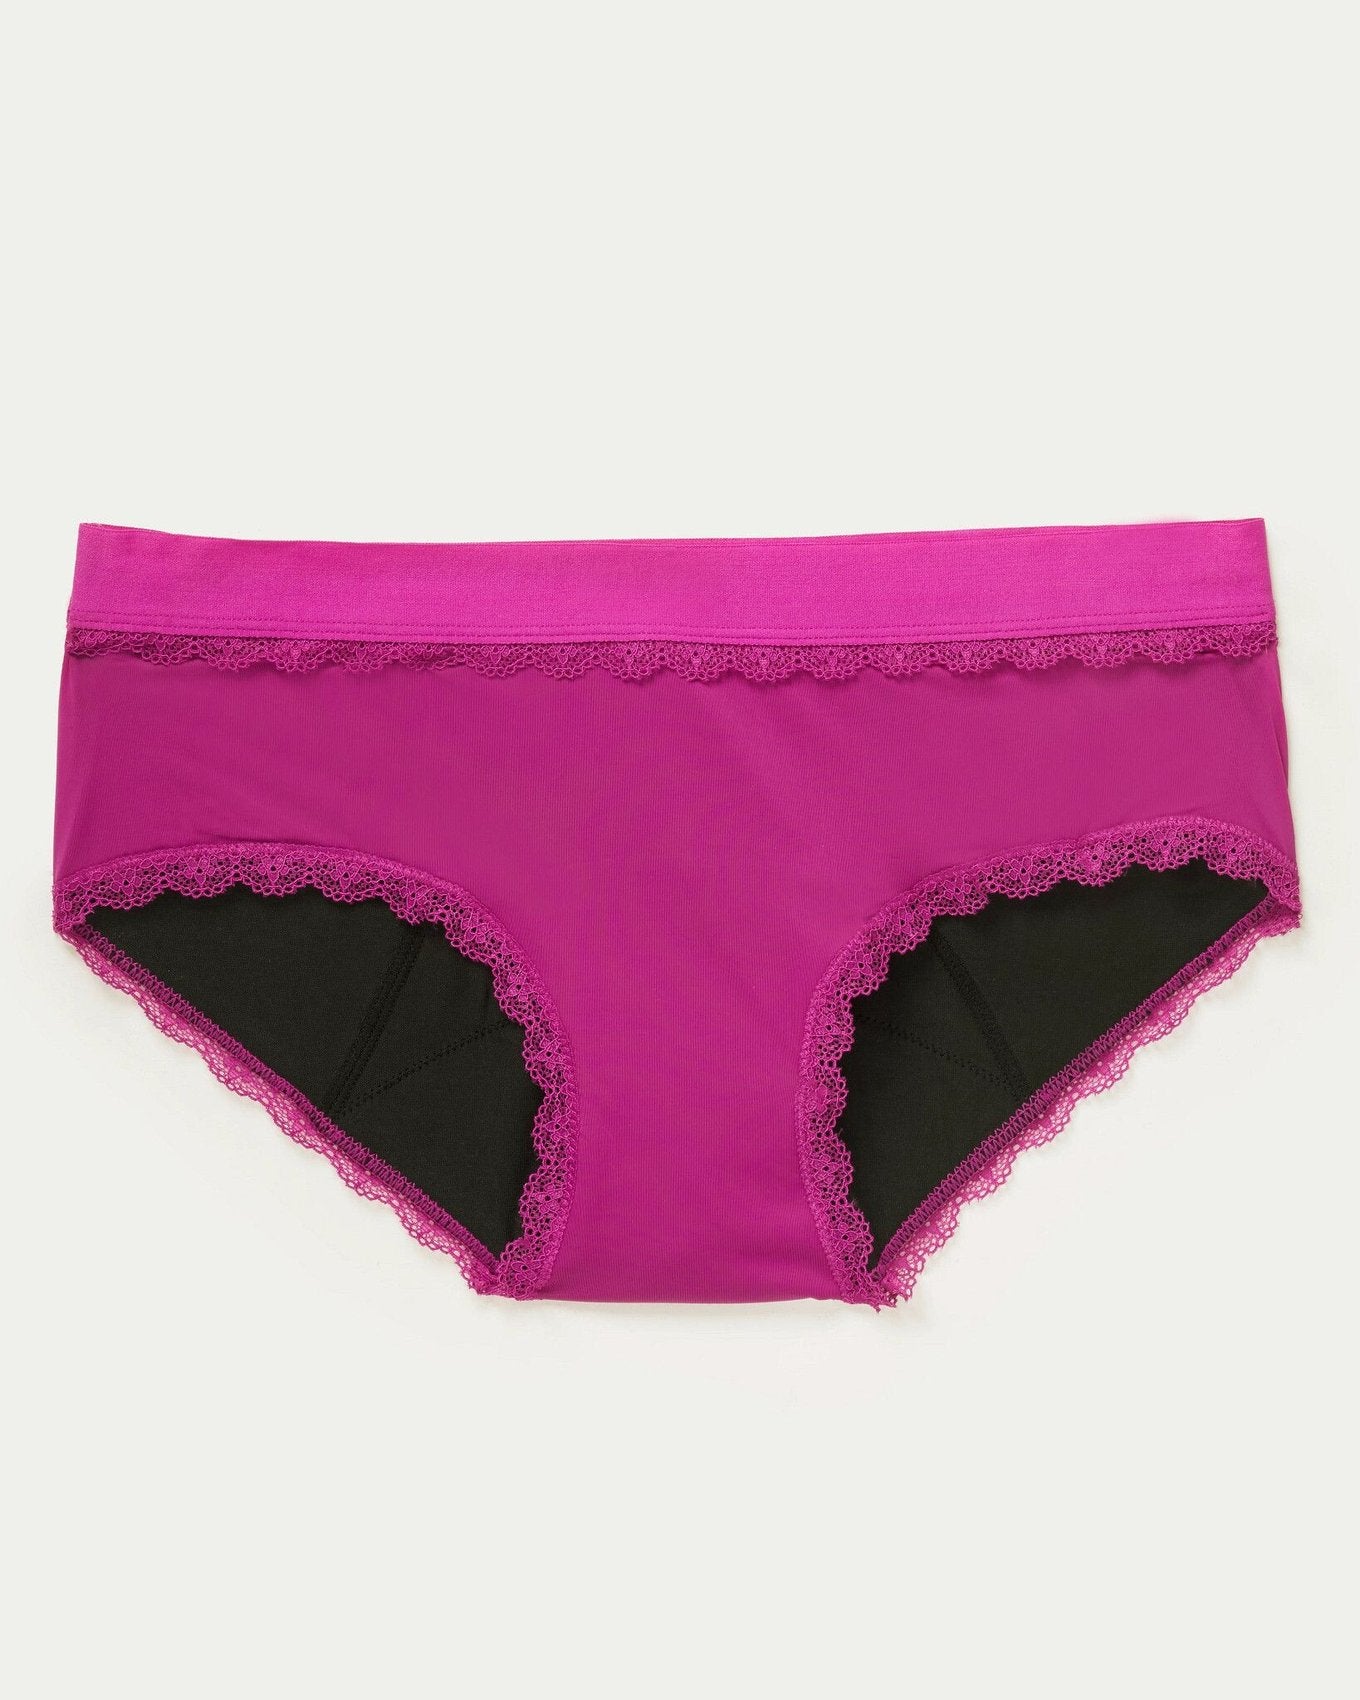 Madison period-proof panty – Joyja